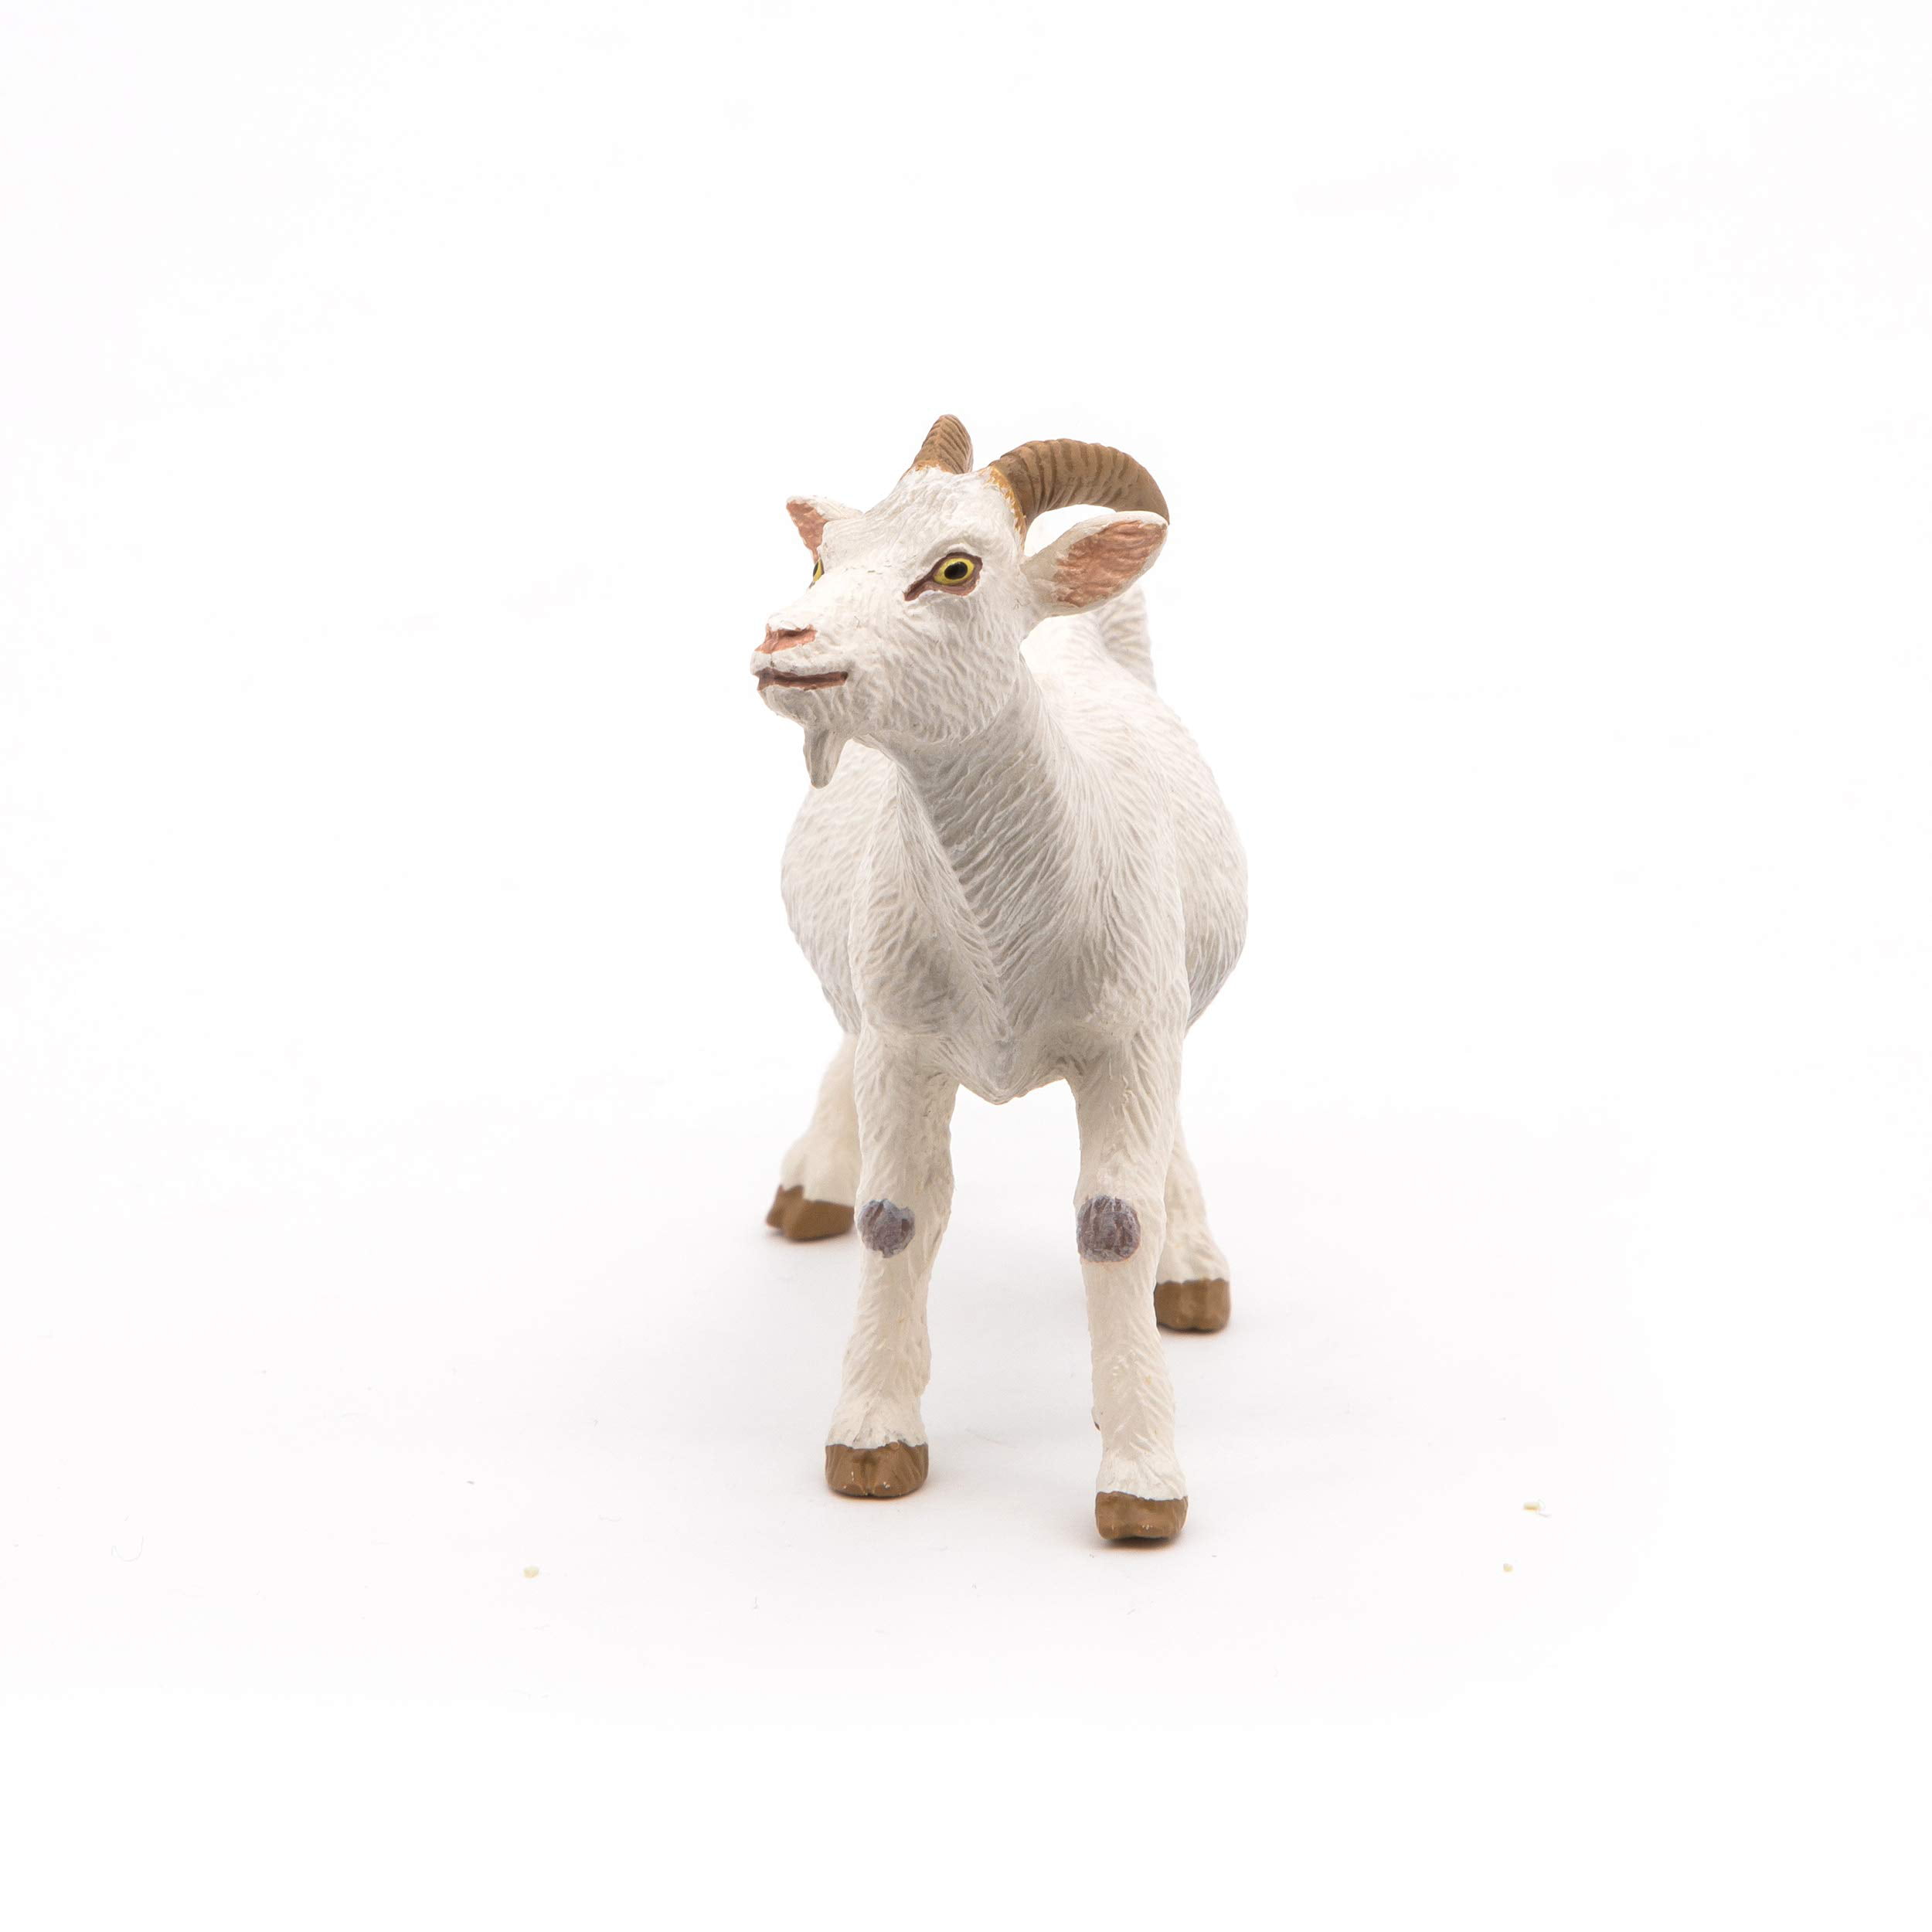 NEU Papo Farm Animals ZIEGE GOAT Toy Figure Retired NWT 51029